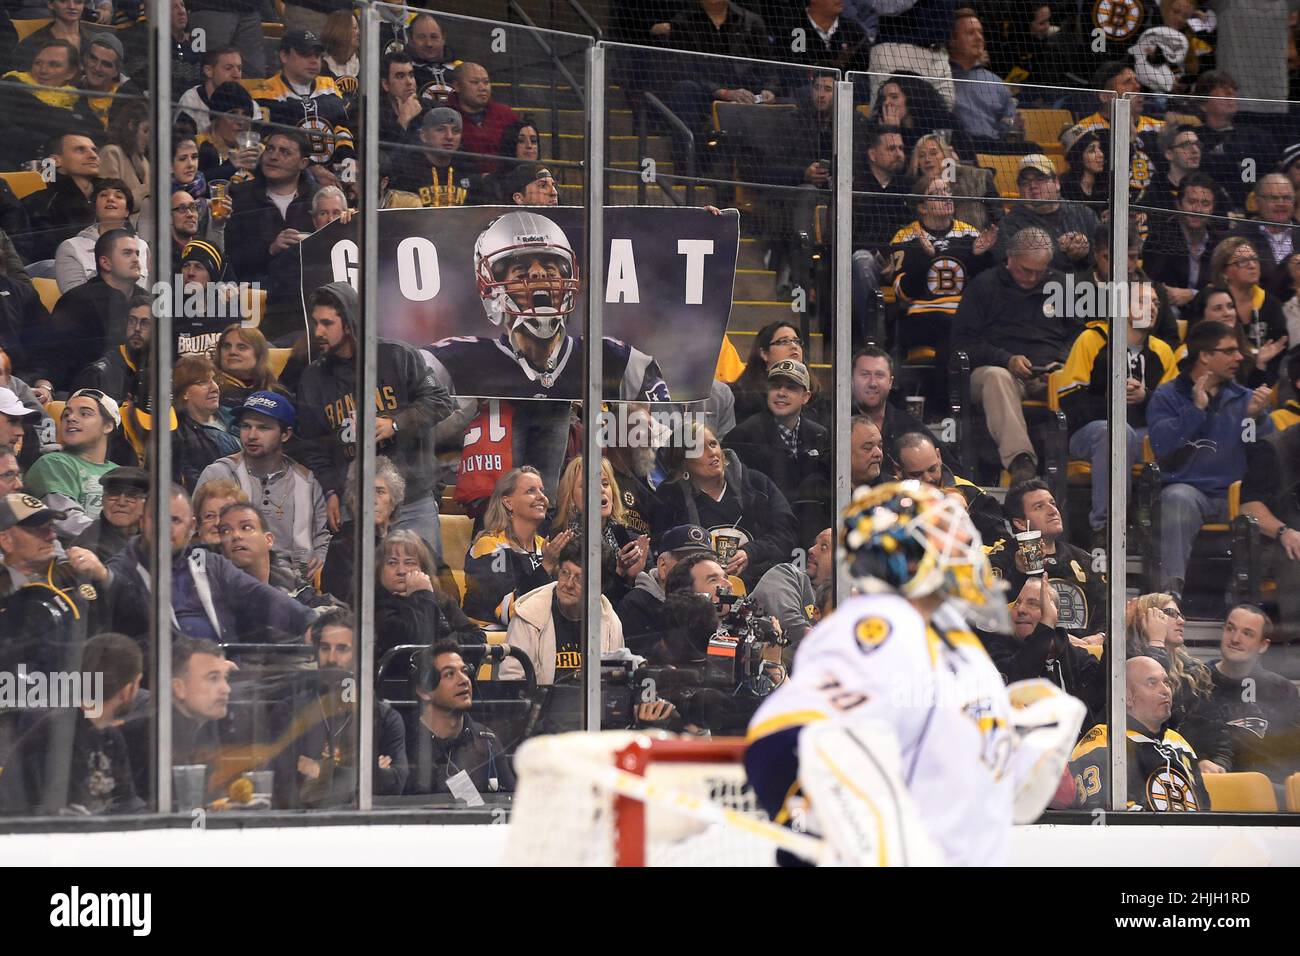 Boston Garden Boston Bruins Hockey NHL Photo 8x12 Unsigned Glossy Game  Picture